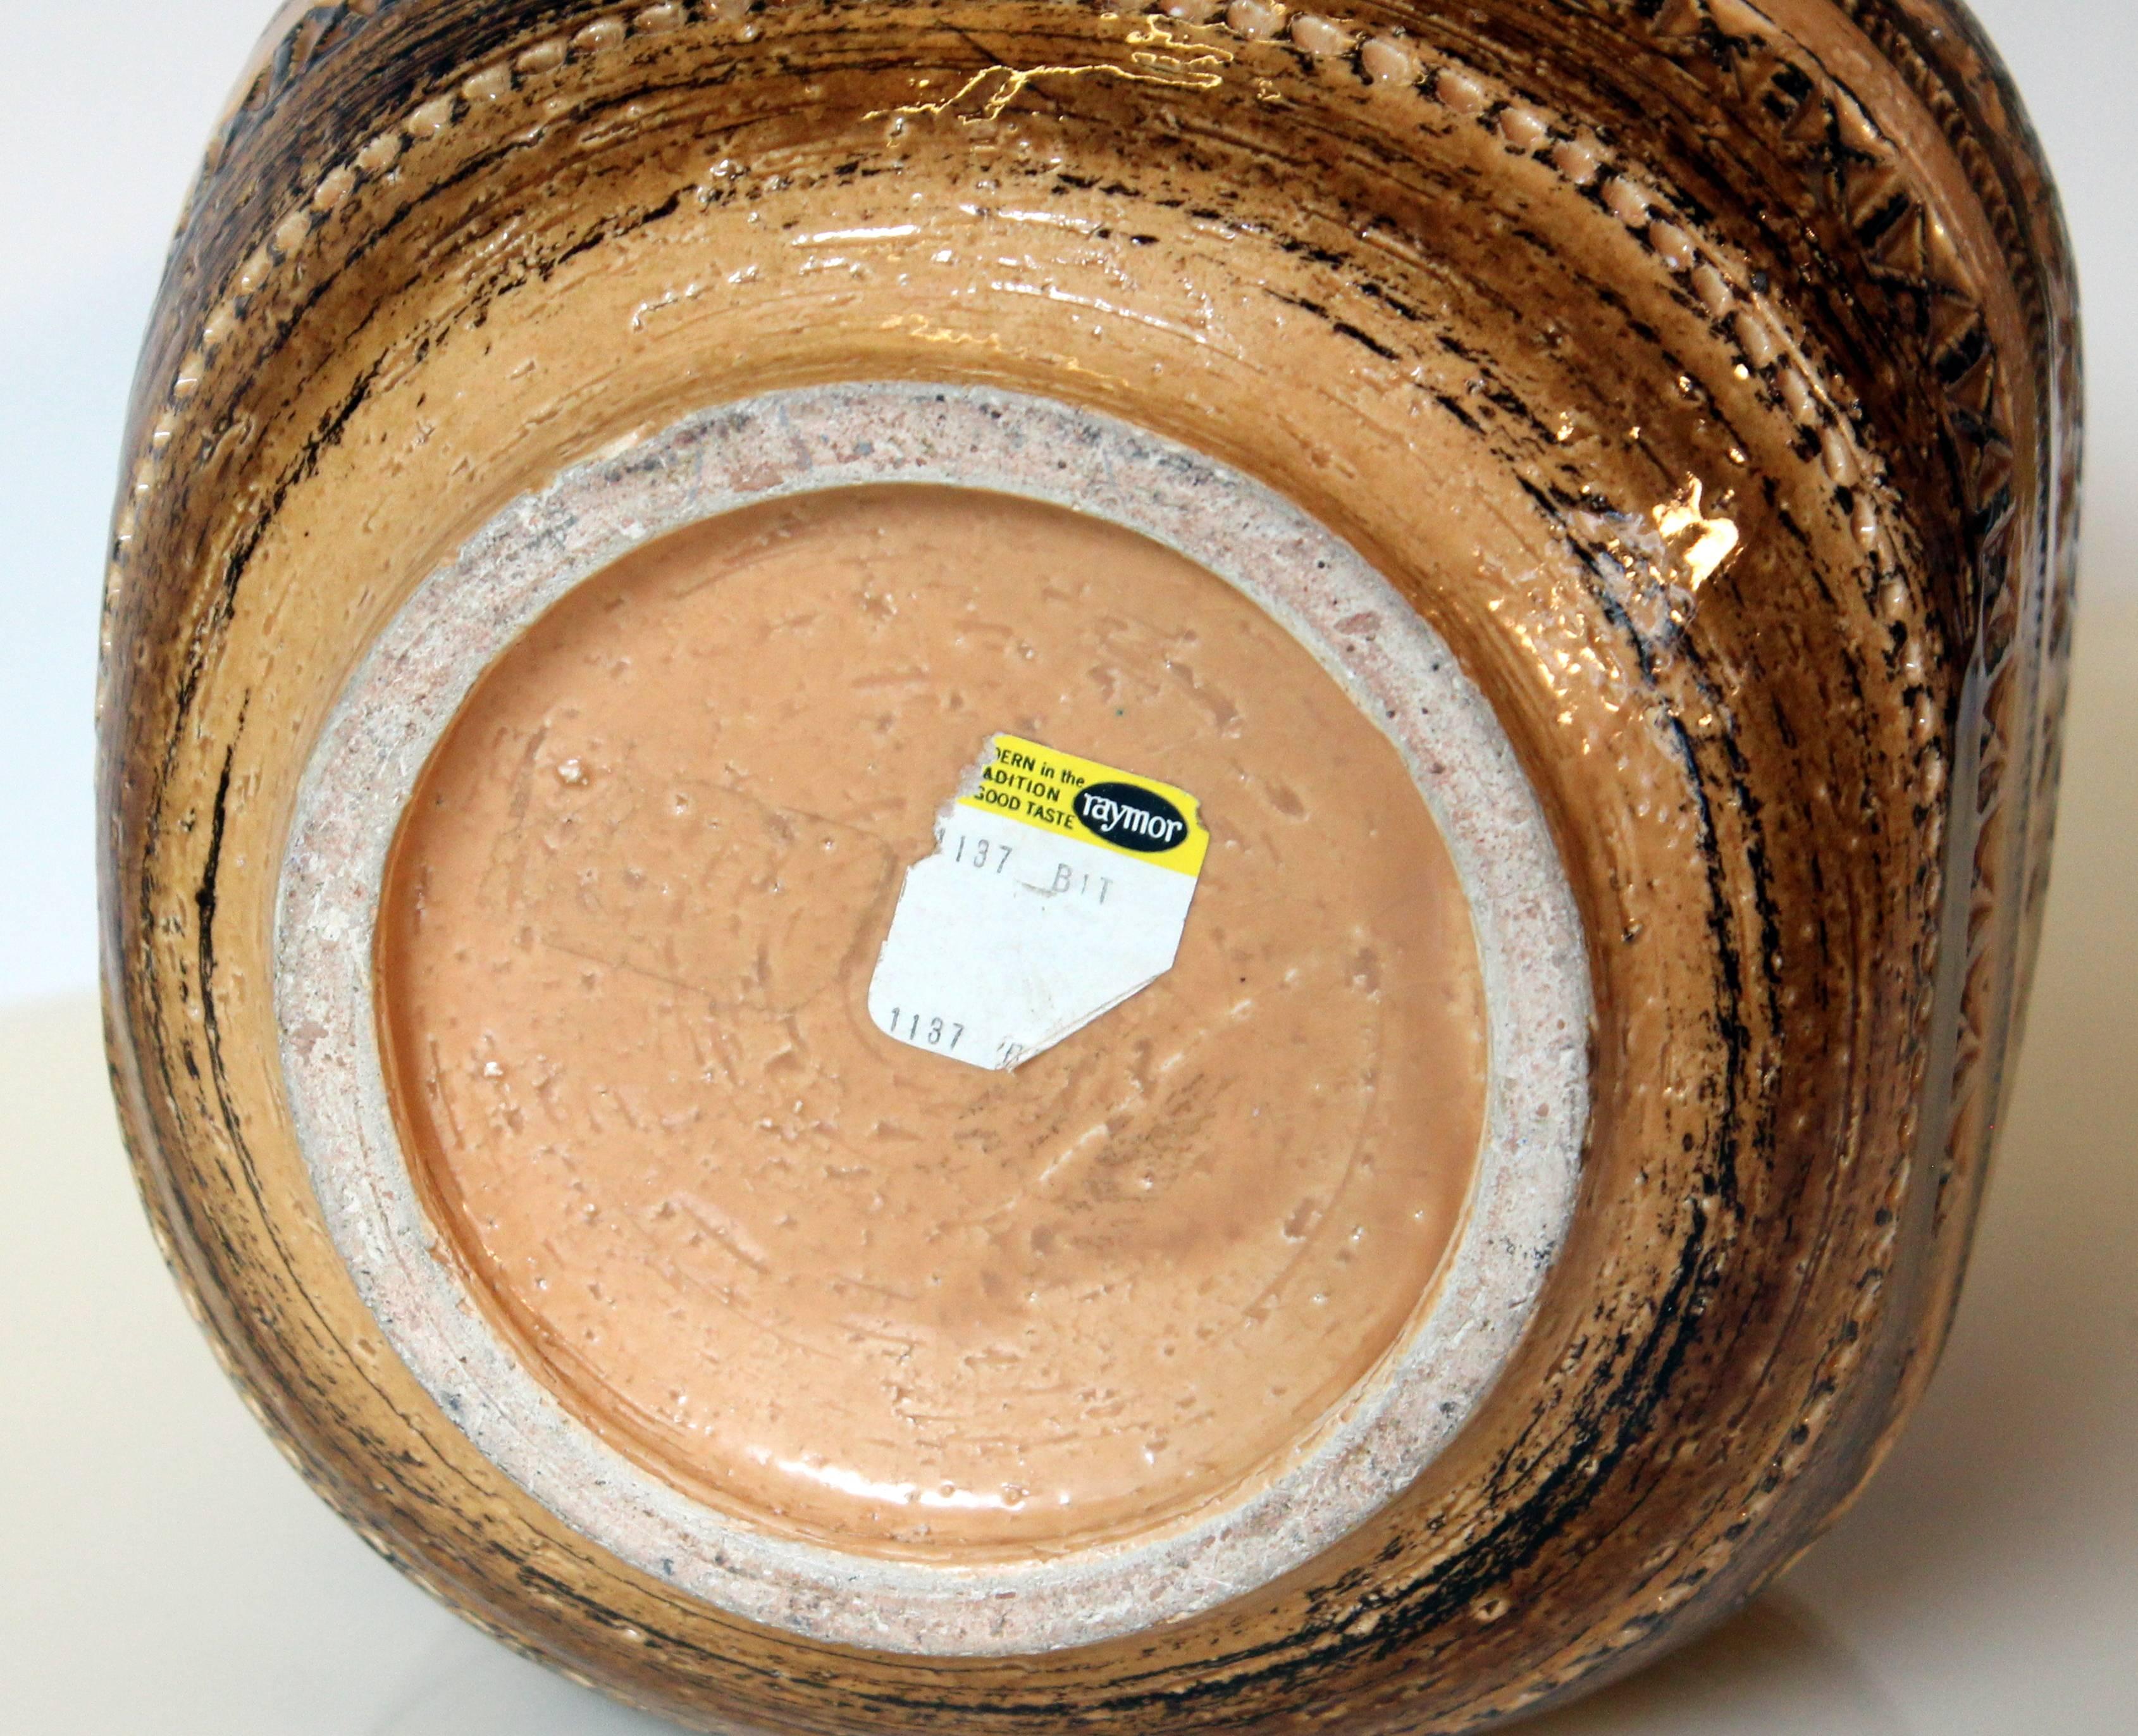 Mid-Century Modern Bitossi for Raymor, Original Label, Large Rimini Sahara Vase Italian Pottery